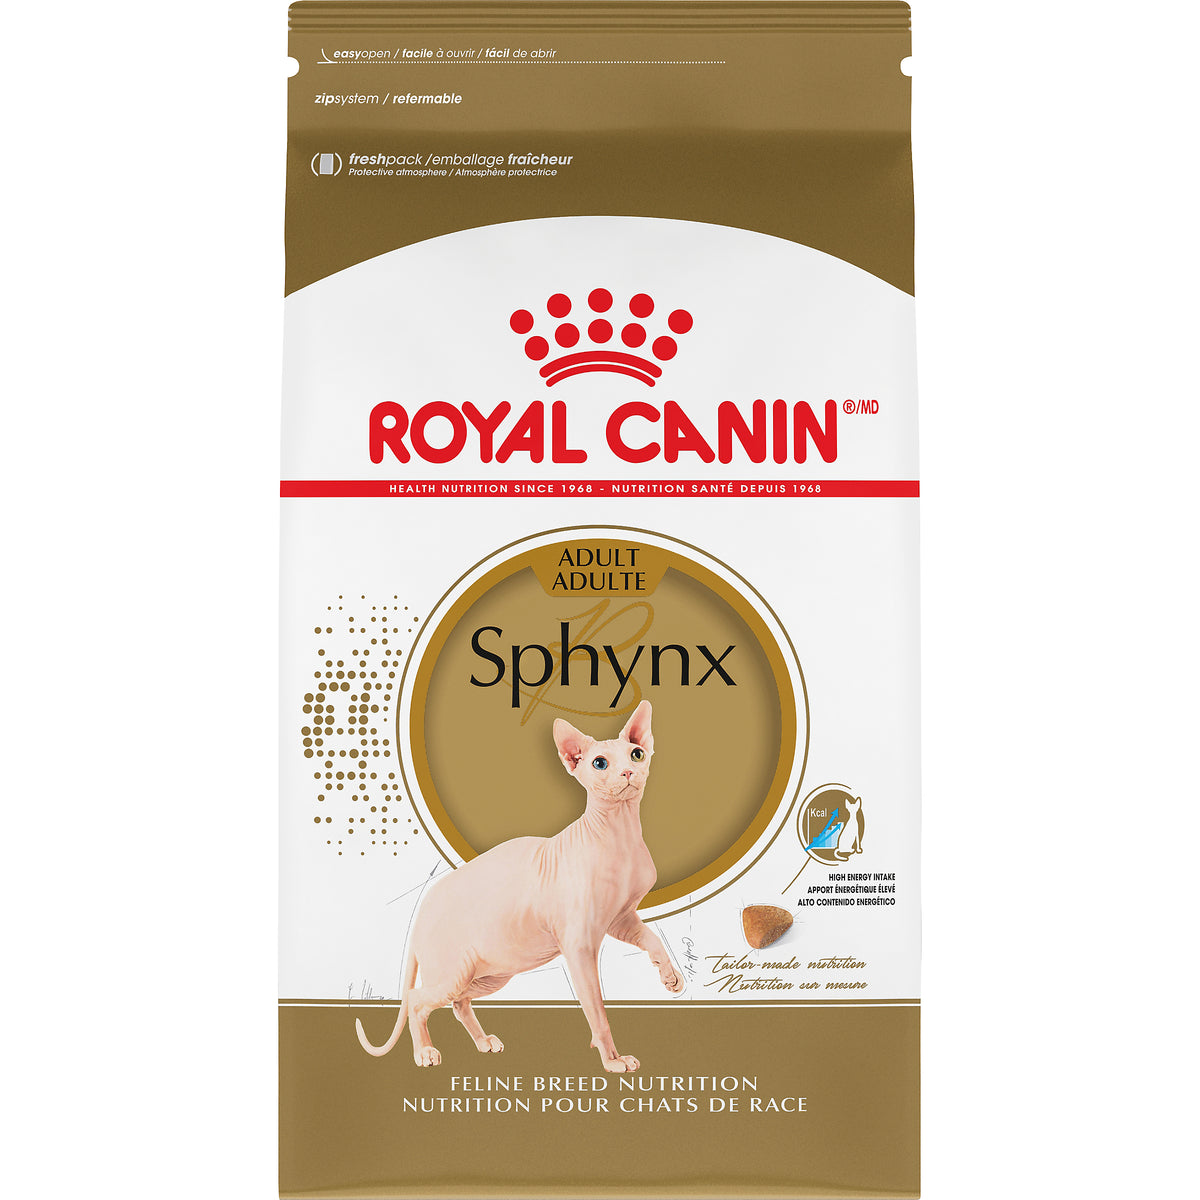 Royal Canin Sphynx Cat Food 7lb